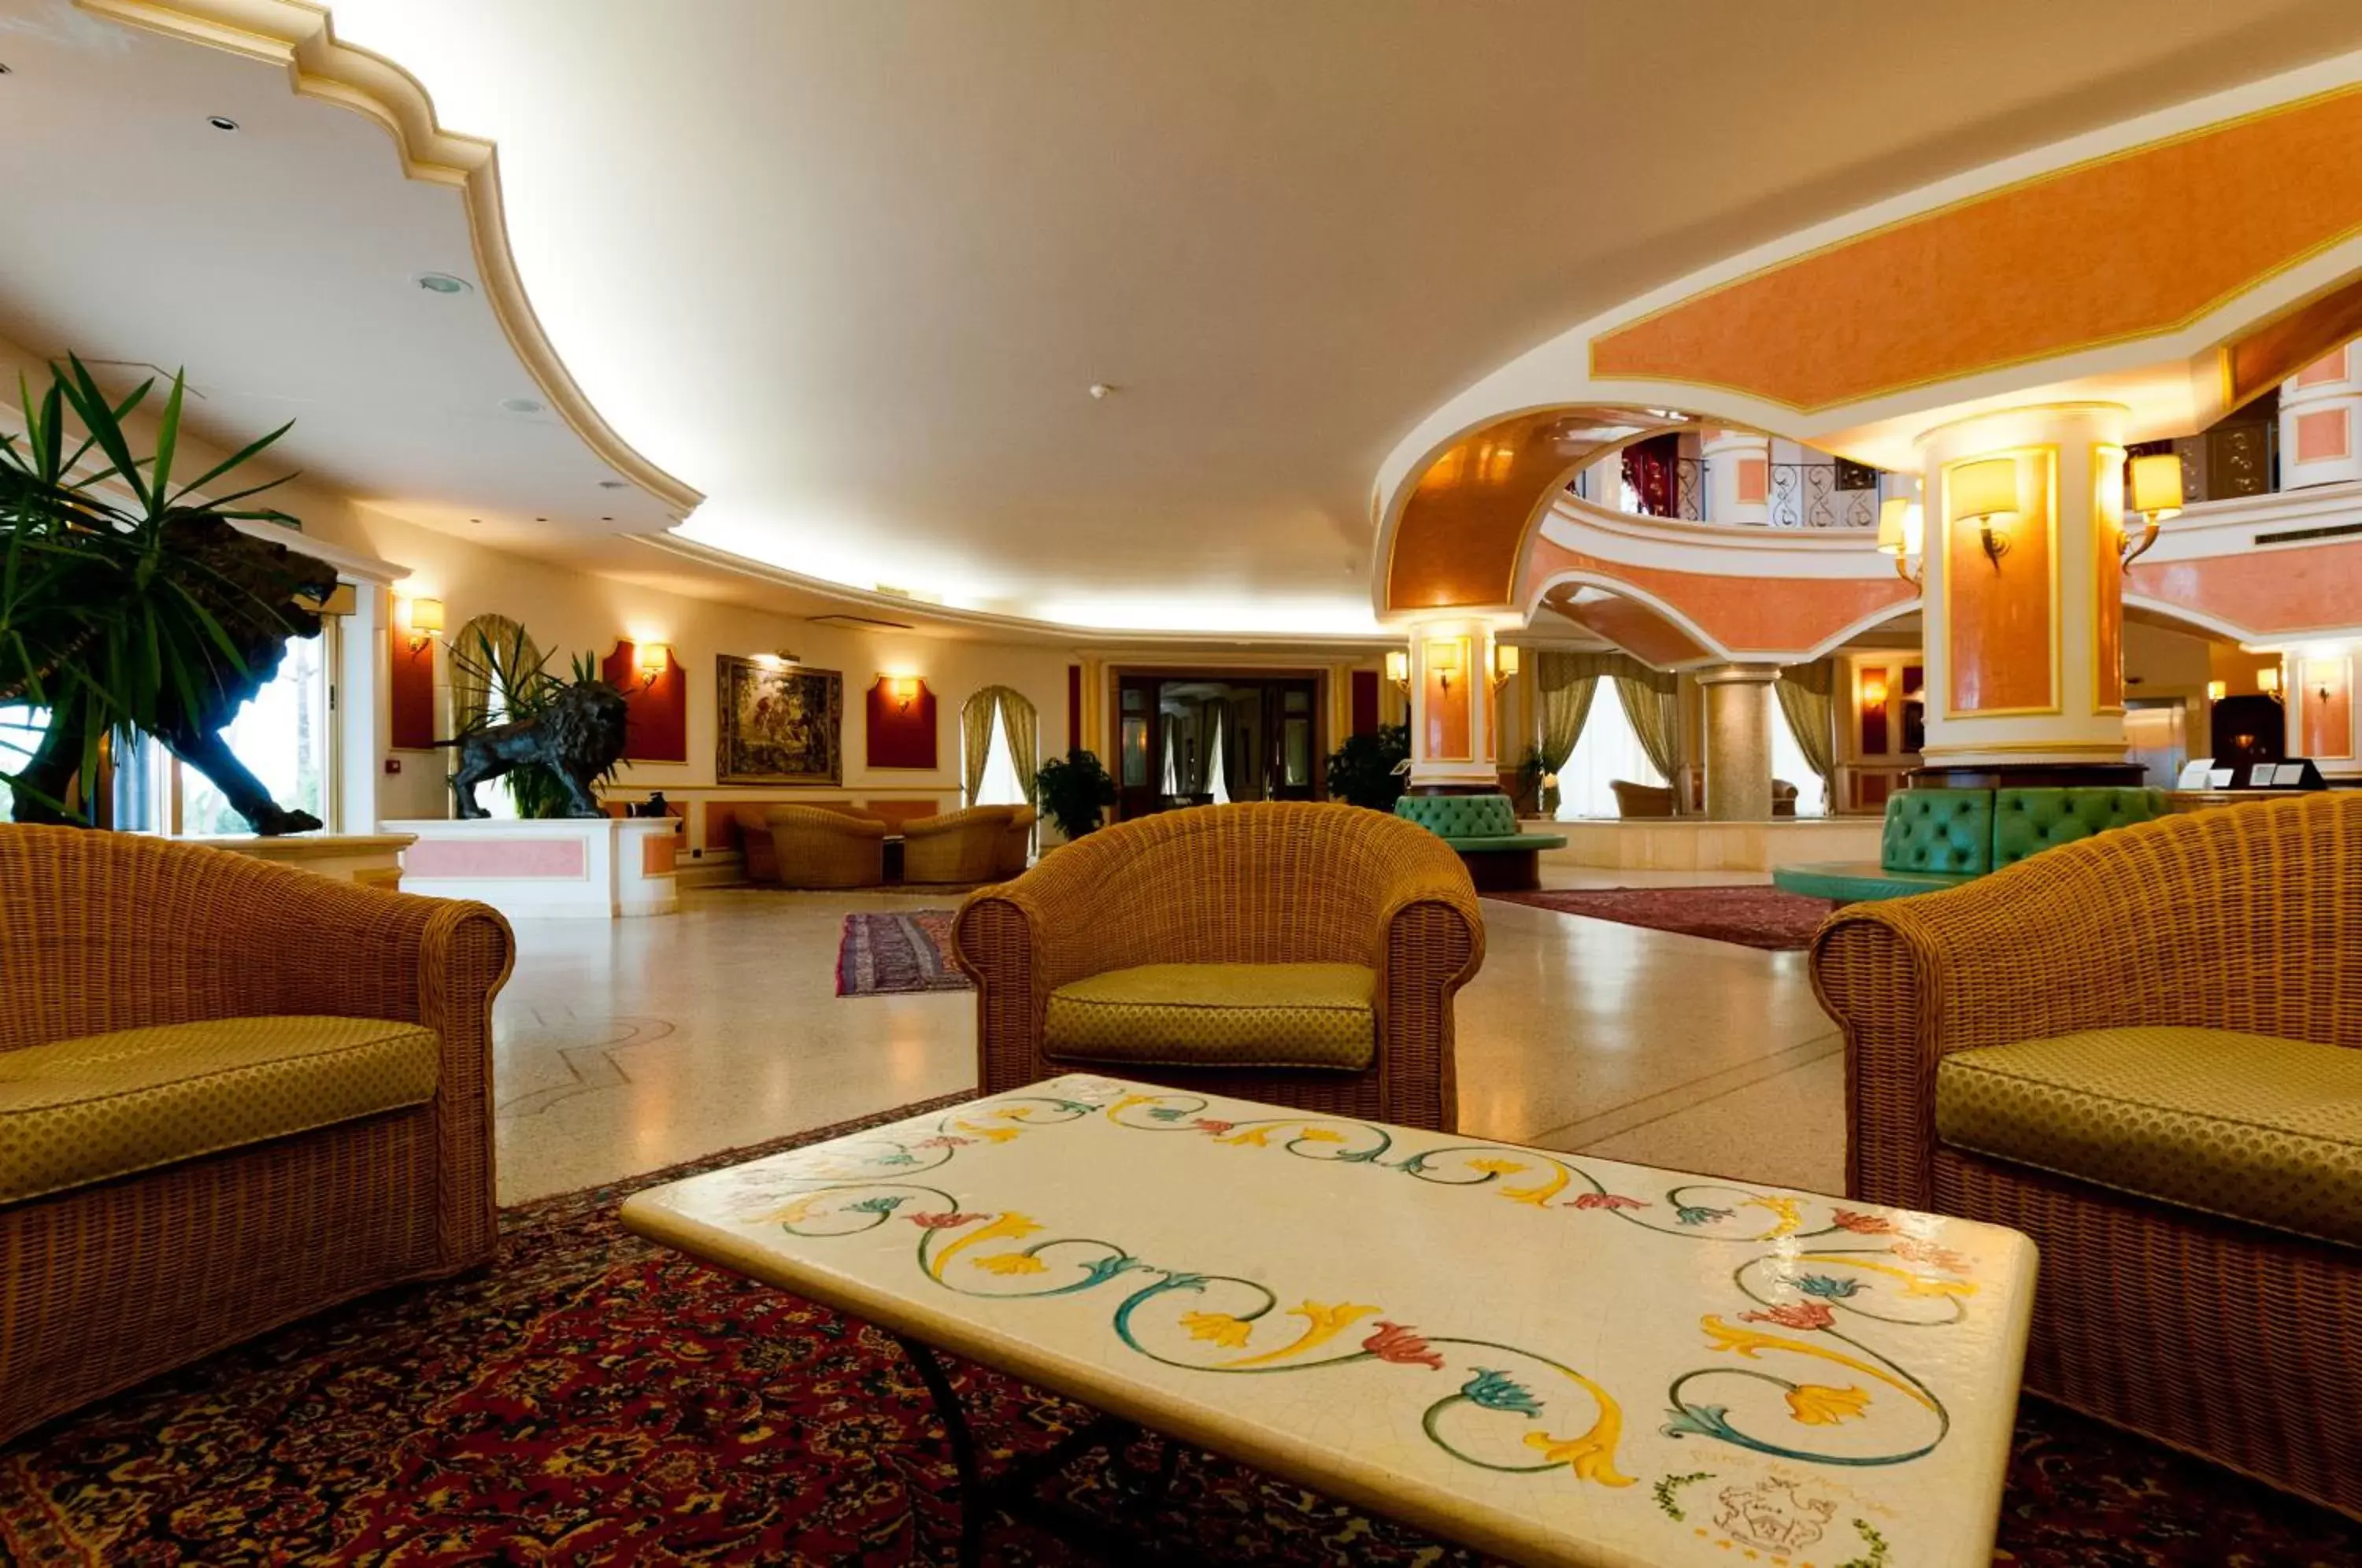 Lobby or reception, Lobby/Reception in Parco dei Principi Hotel